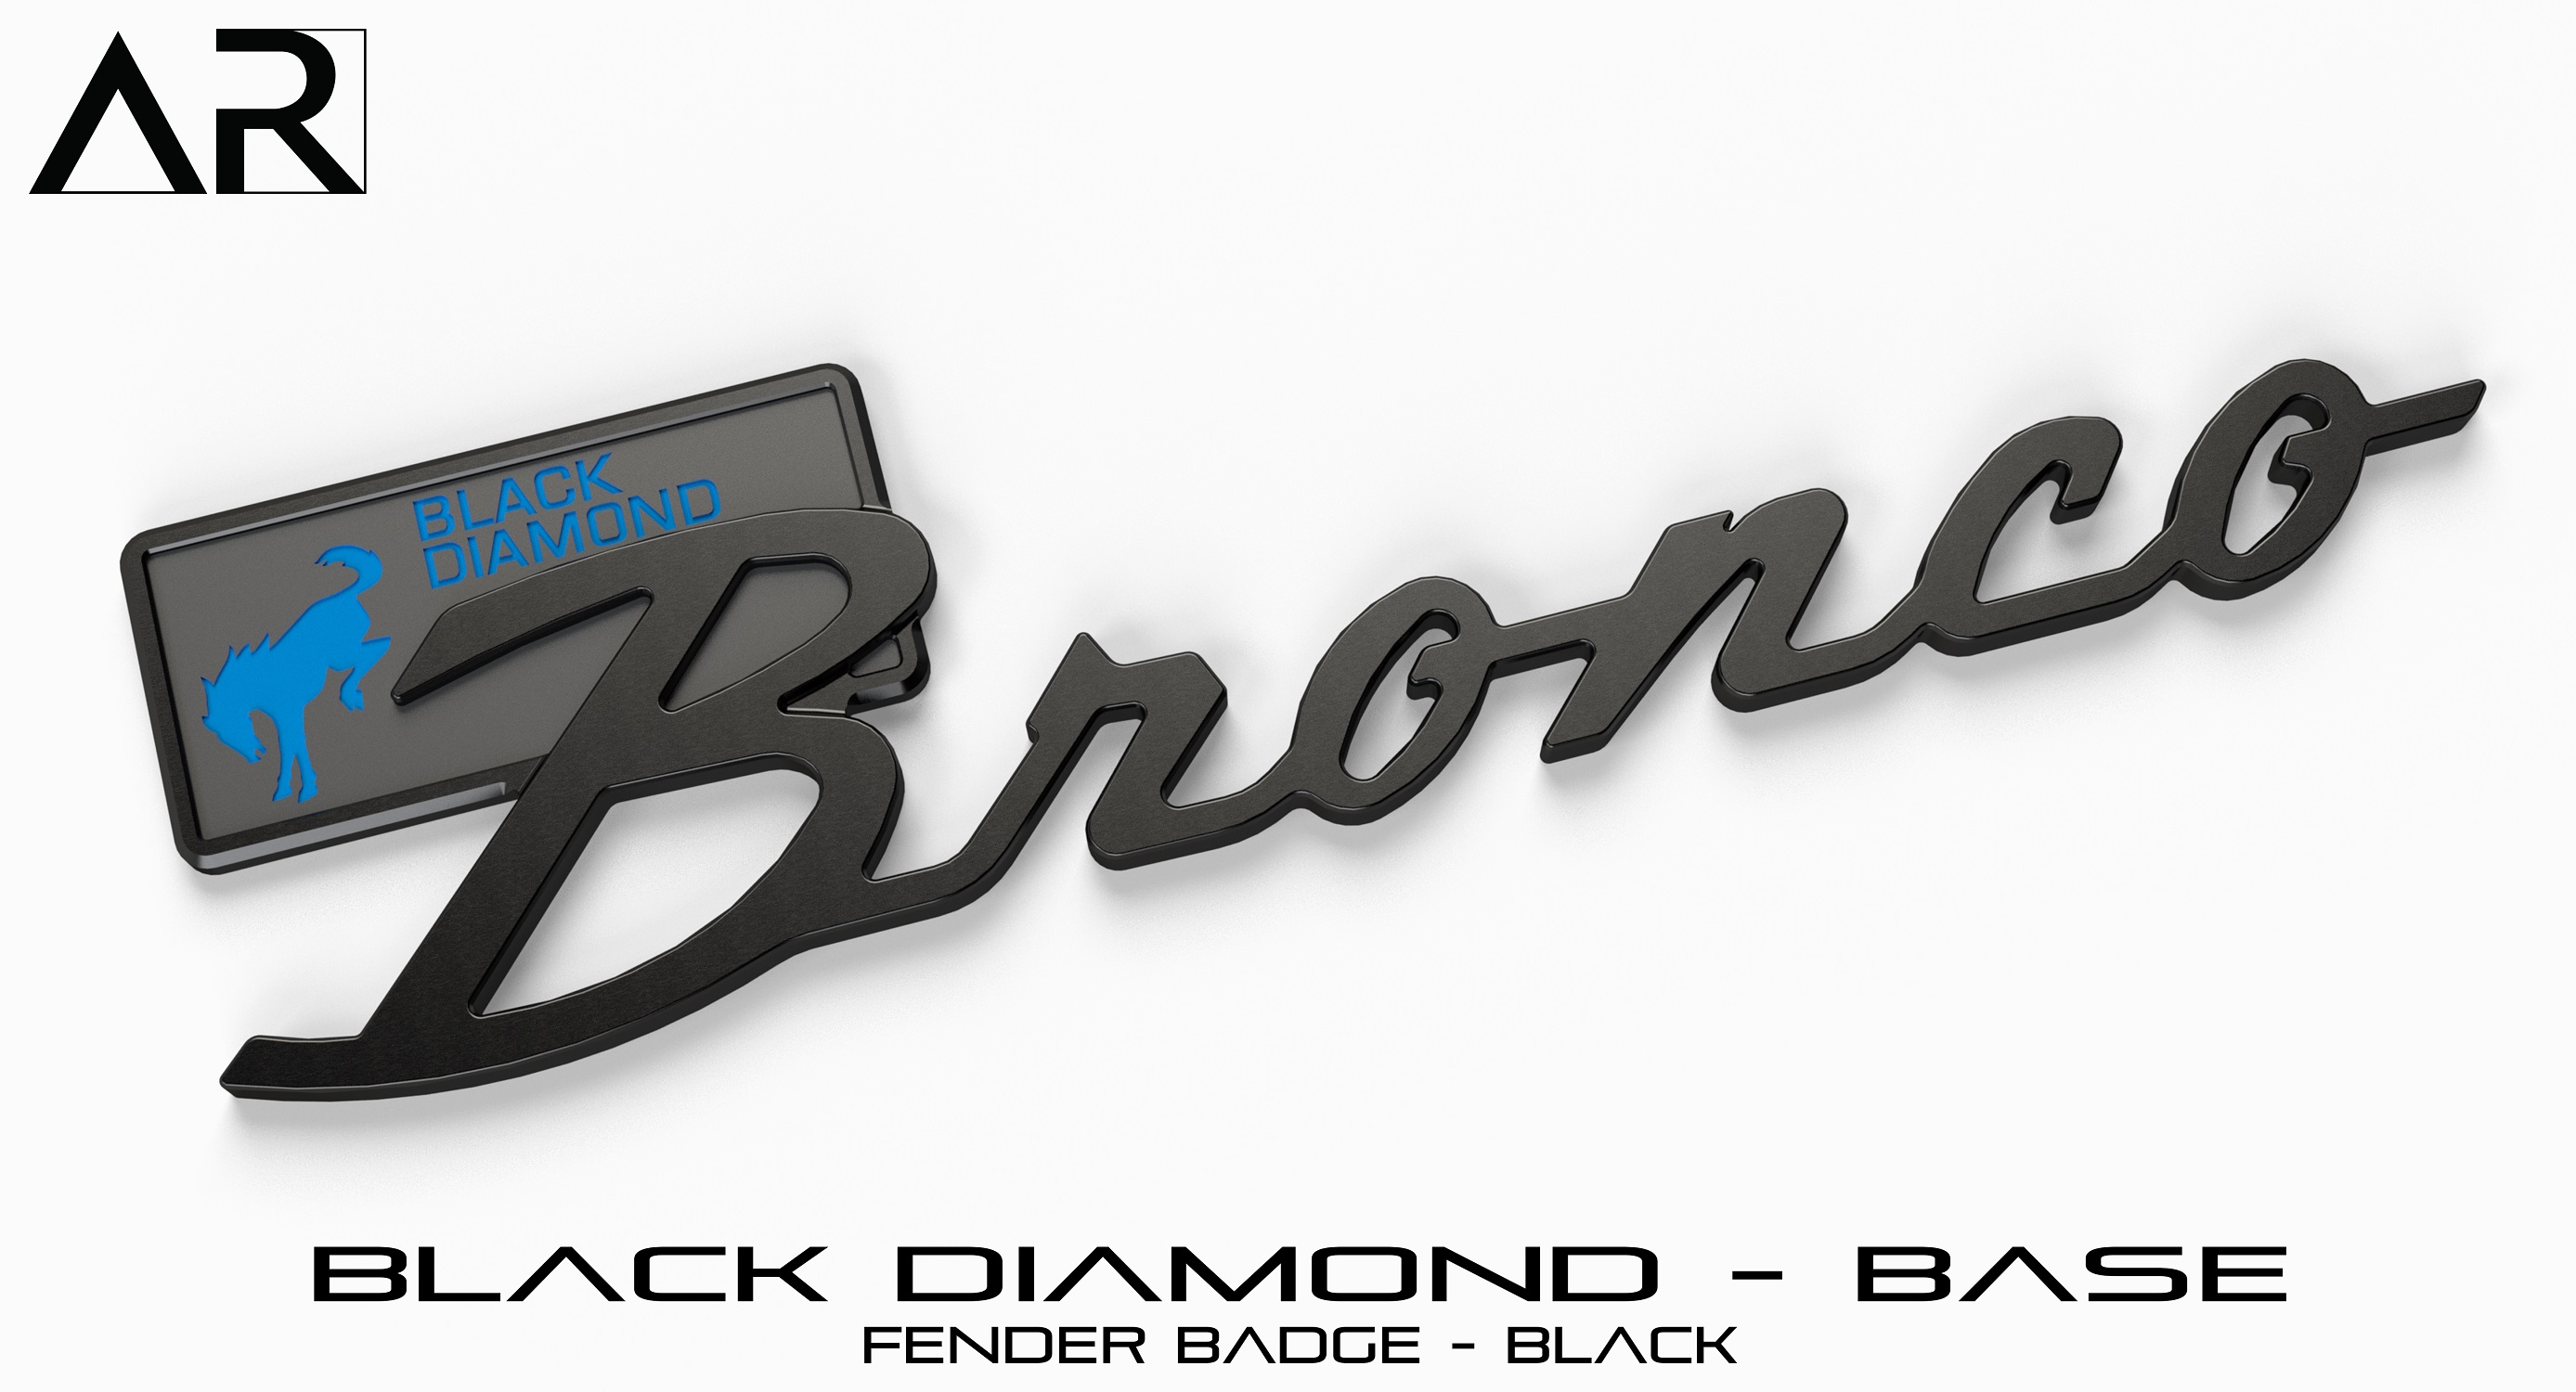 Ford Bronco AR | BRONCO CLASSIC DNA Fender Badge 1601008_B  - Fender Badge  - Black Diamond Base - Black